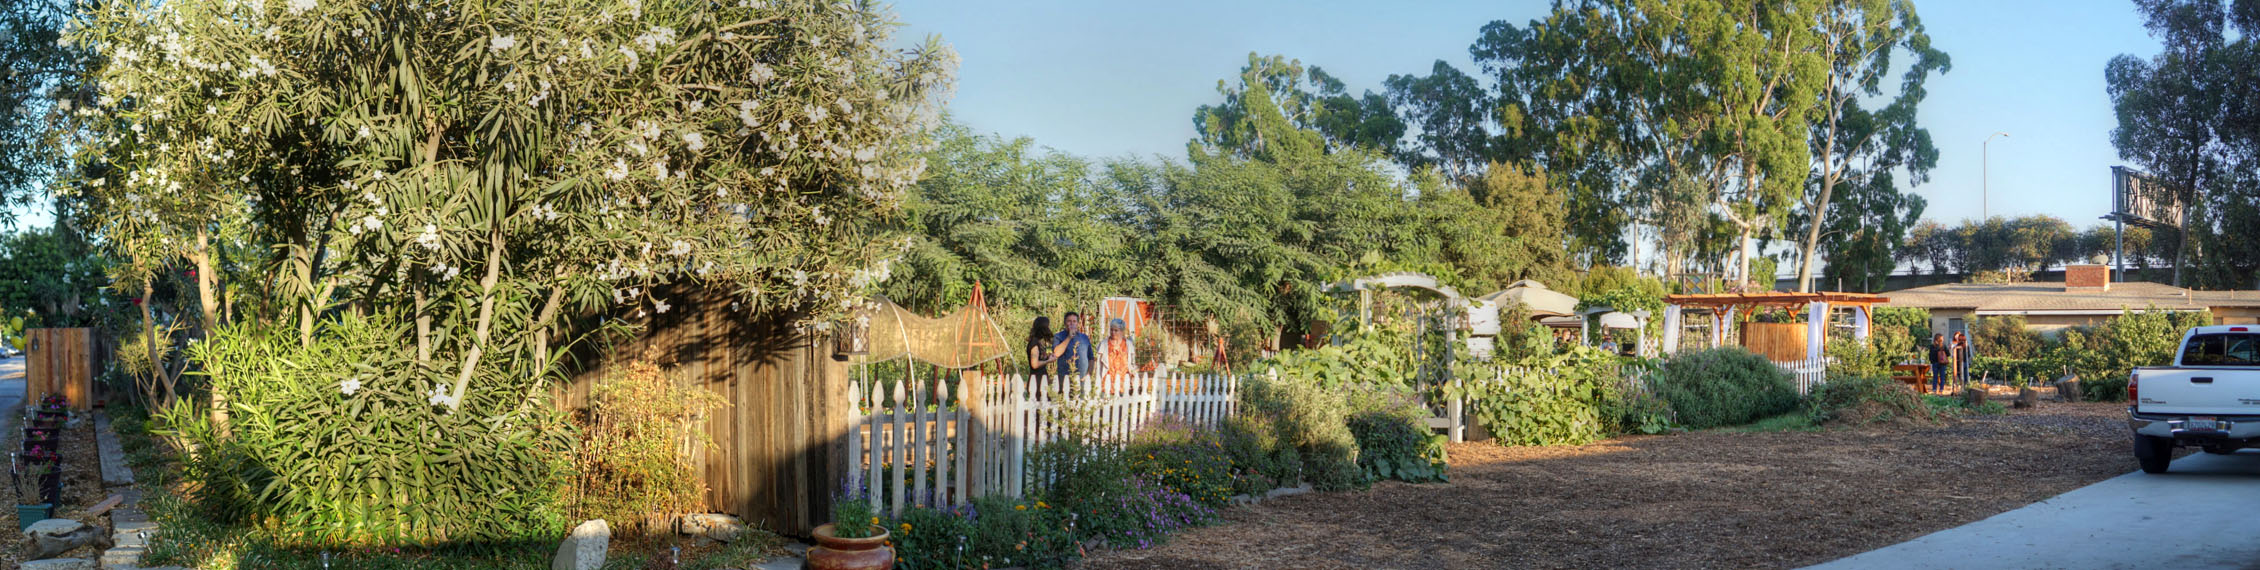 Entrance to Organic Harvest Gardens